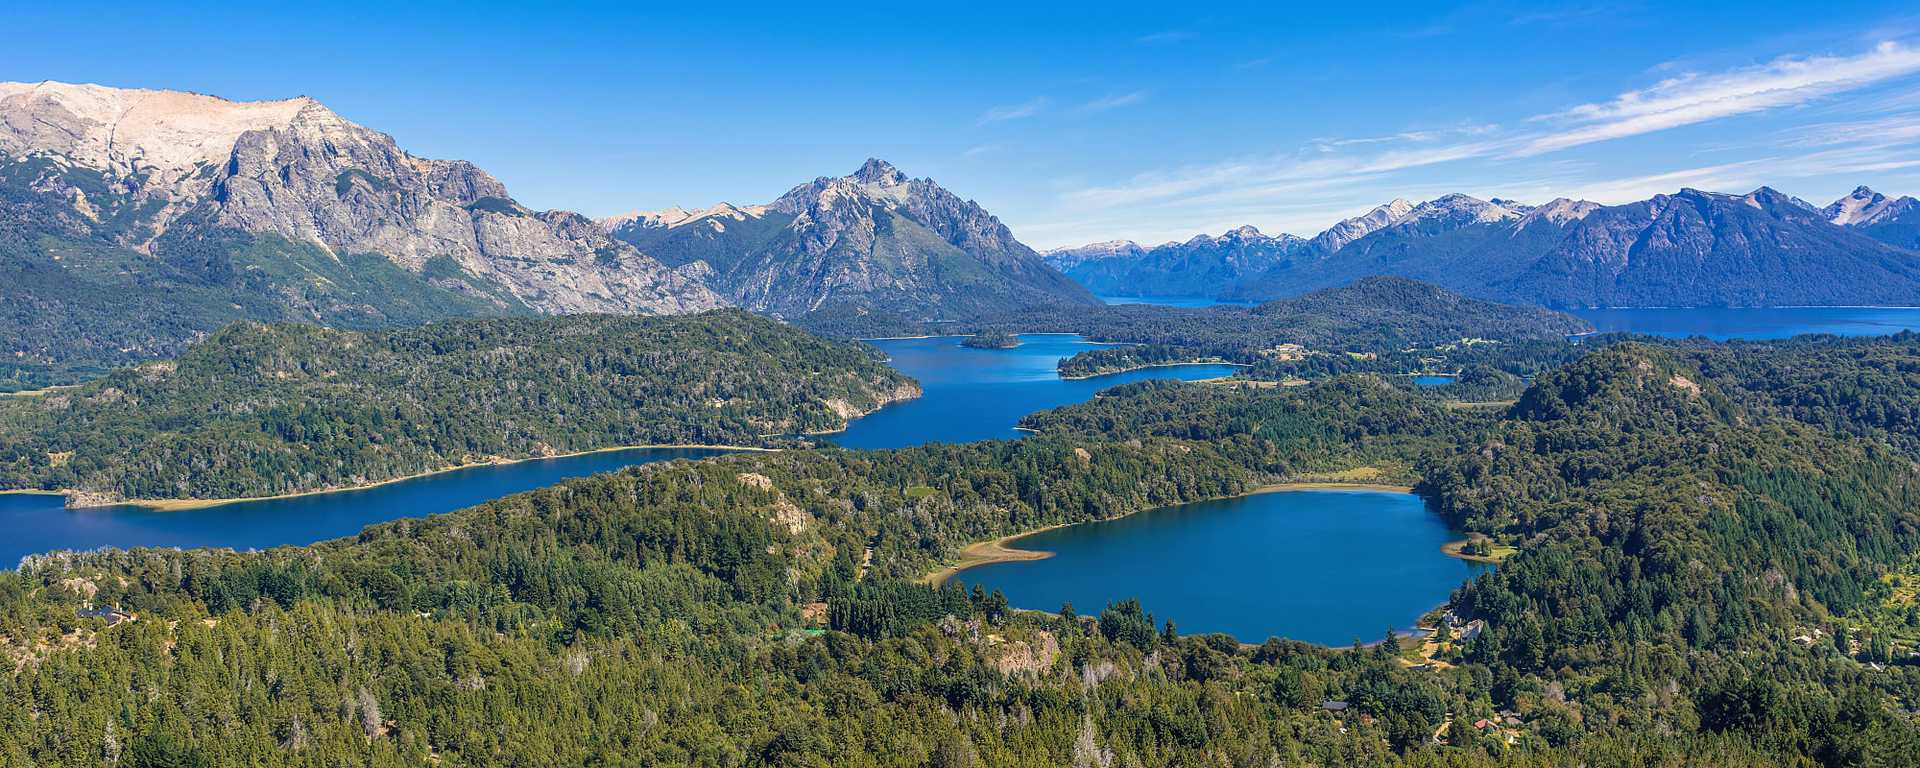 Nahuel Huapi Lake in Bariloche, Argentina